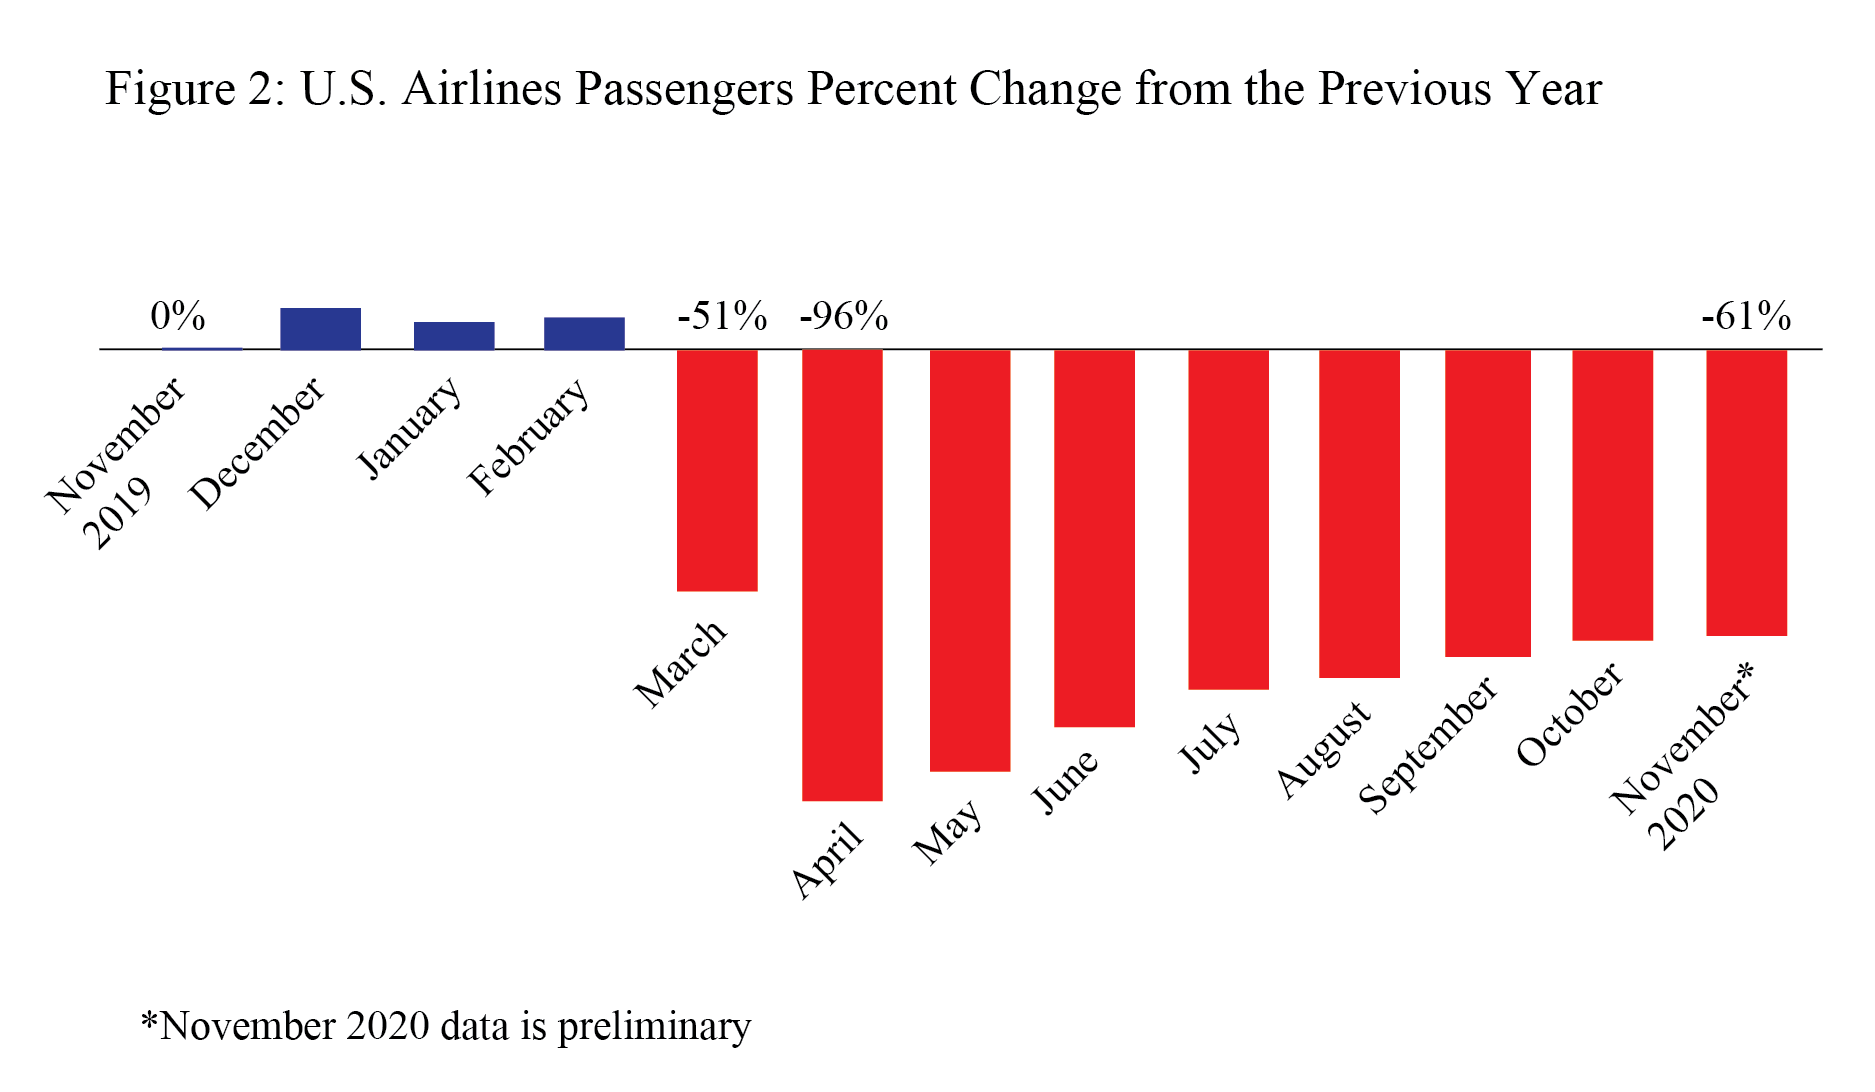 U.S. Airlines Passengers, November 2020 (Preliminary)